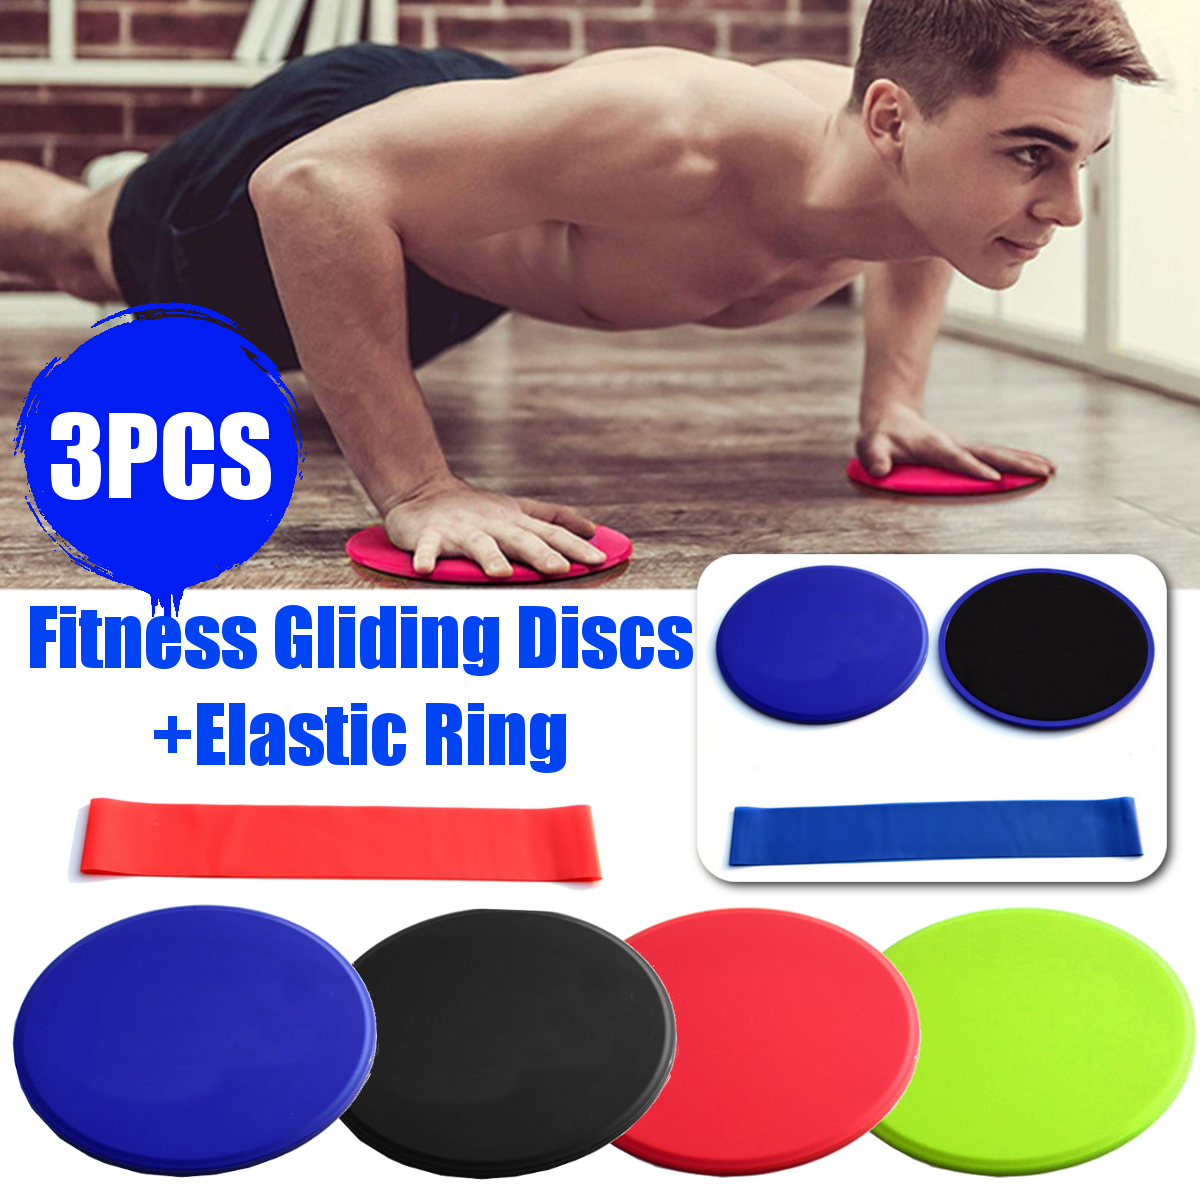 3pcs-Fitness-Core-Sliders-Pad-Resistance-Bands-Set-Anti-slip-Gliding-Slider-Sport-Fitness-Yoga-Mats-1679311-1